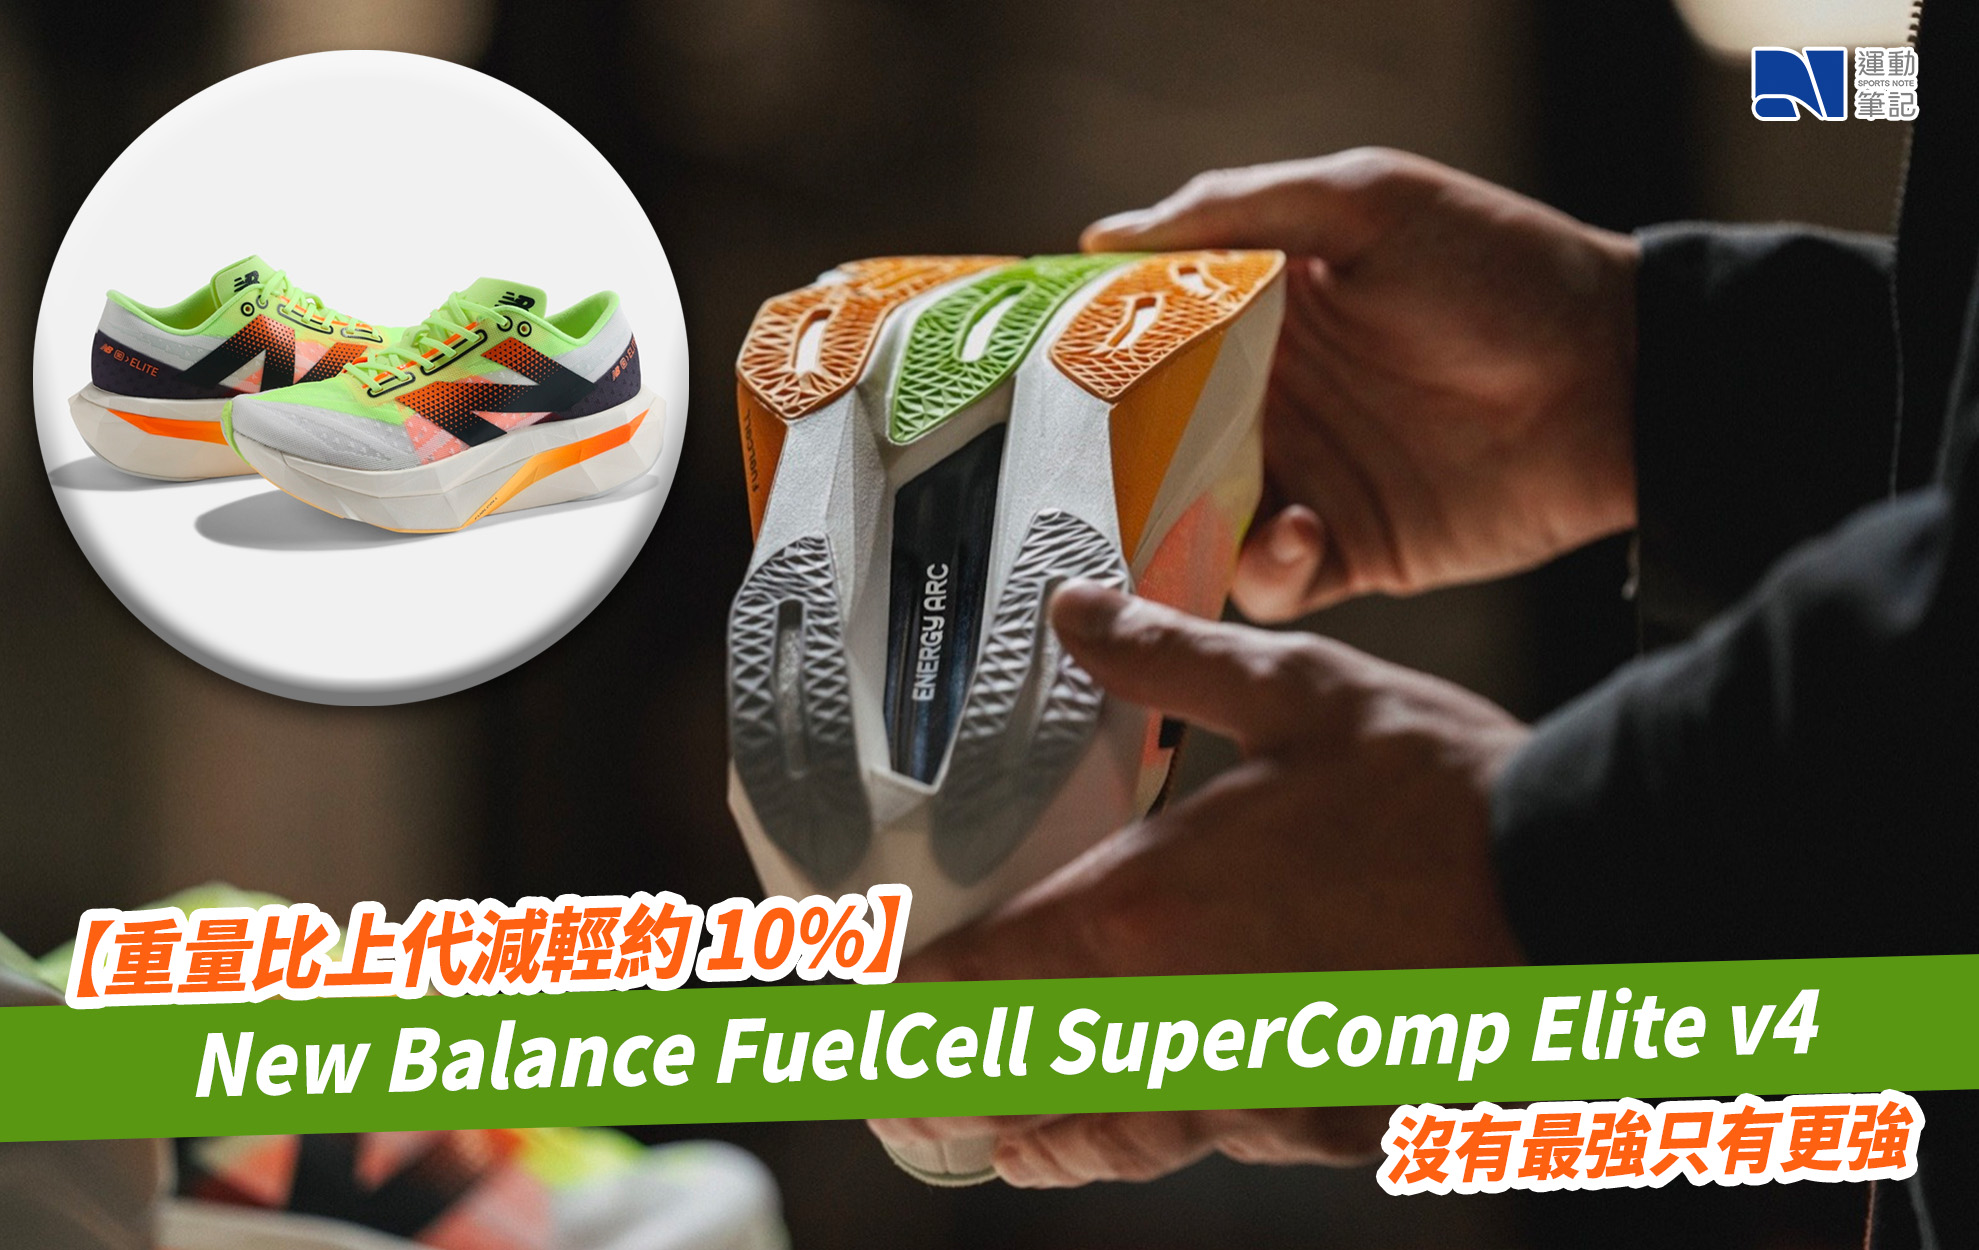 FuelCell SuperComp Elite v4 - New Balance